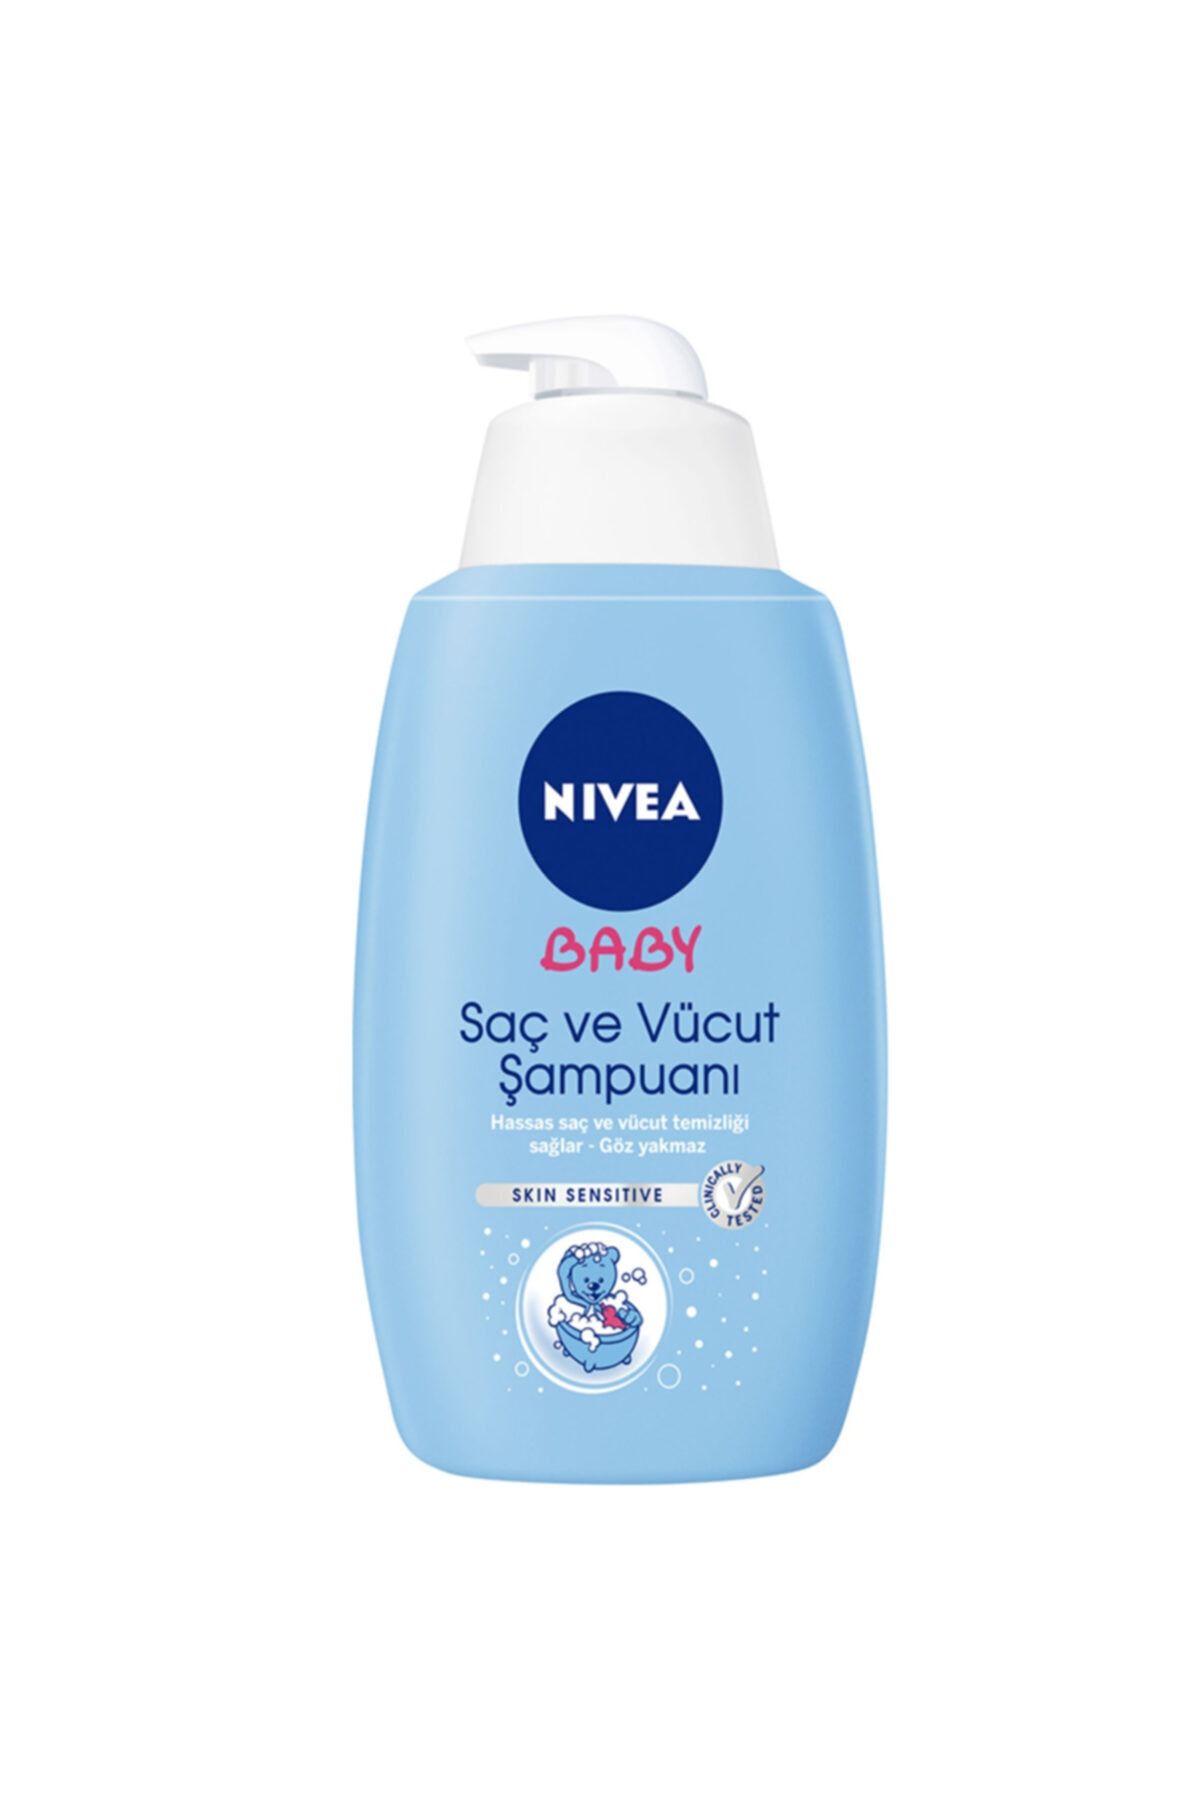 NIVEA Baby Saç ve Vücut Şampuanı Skin Sensitive 750 ml